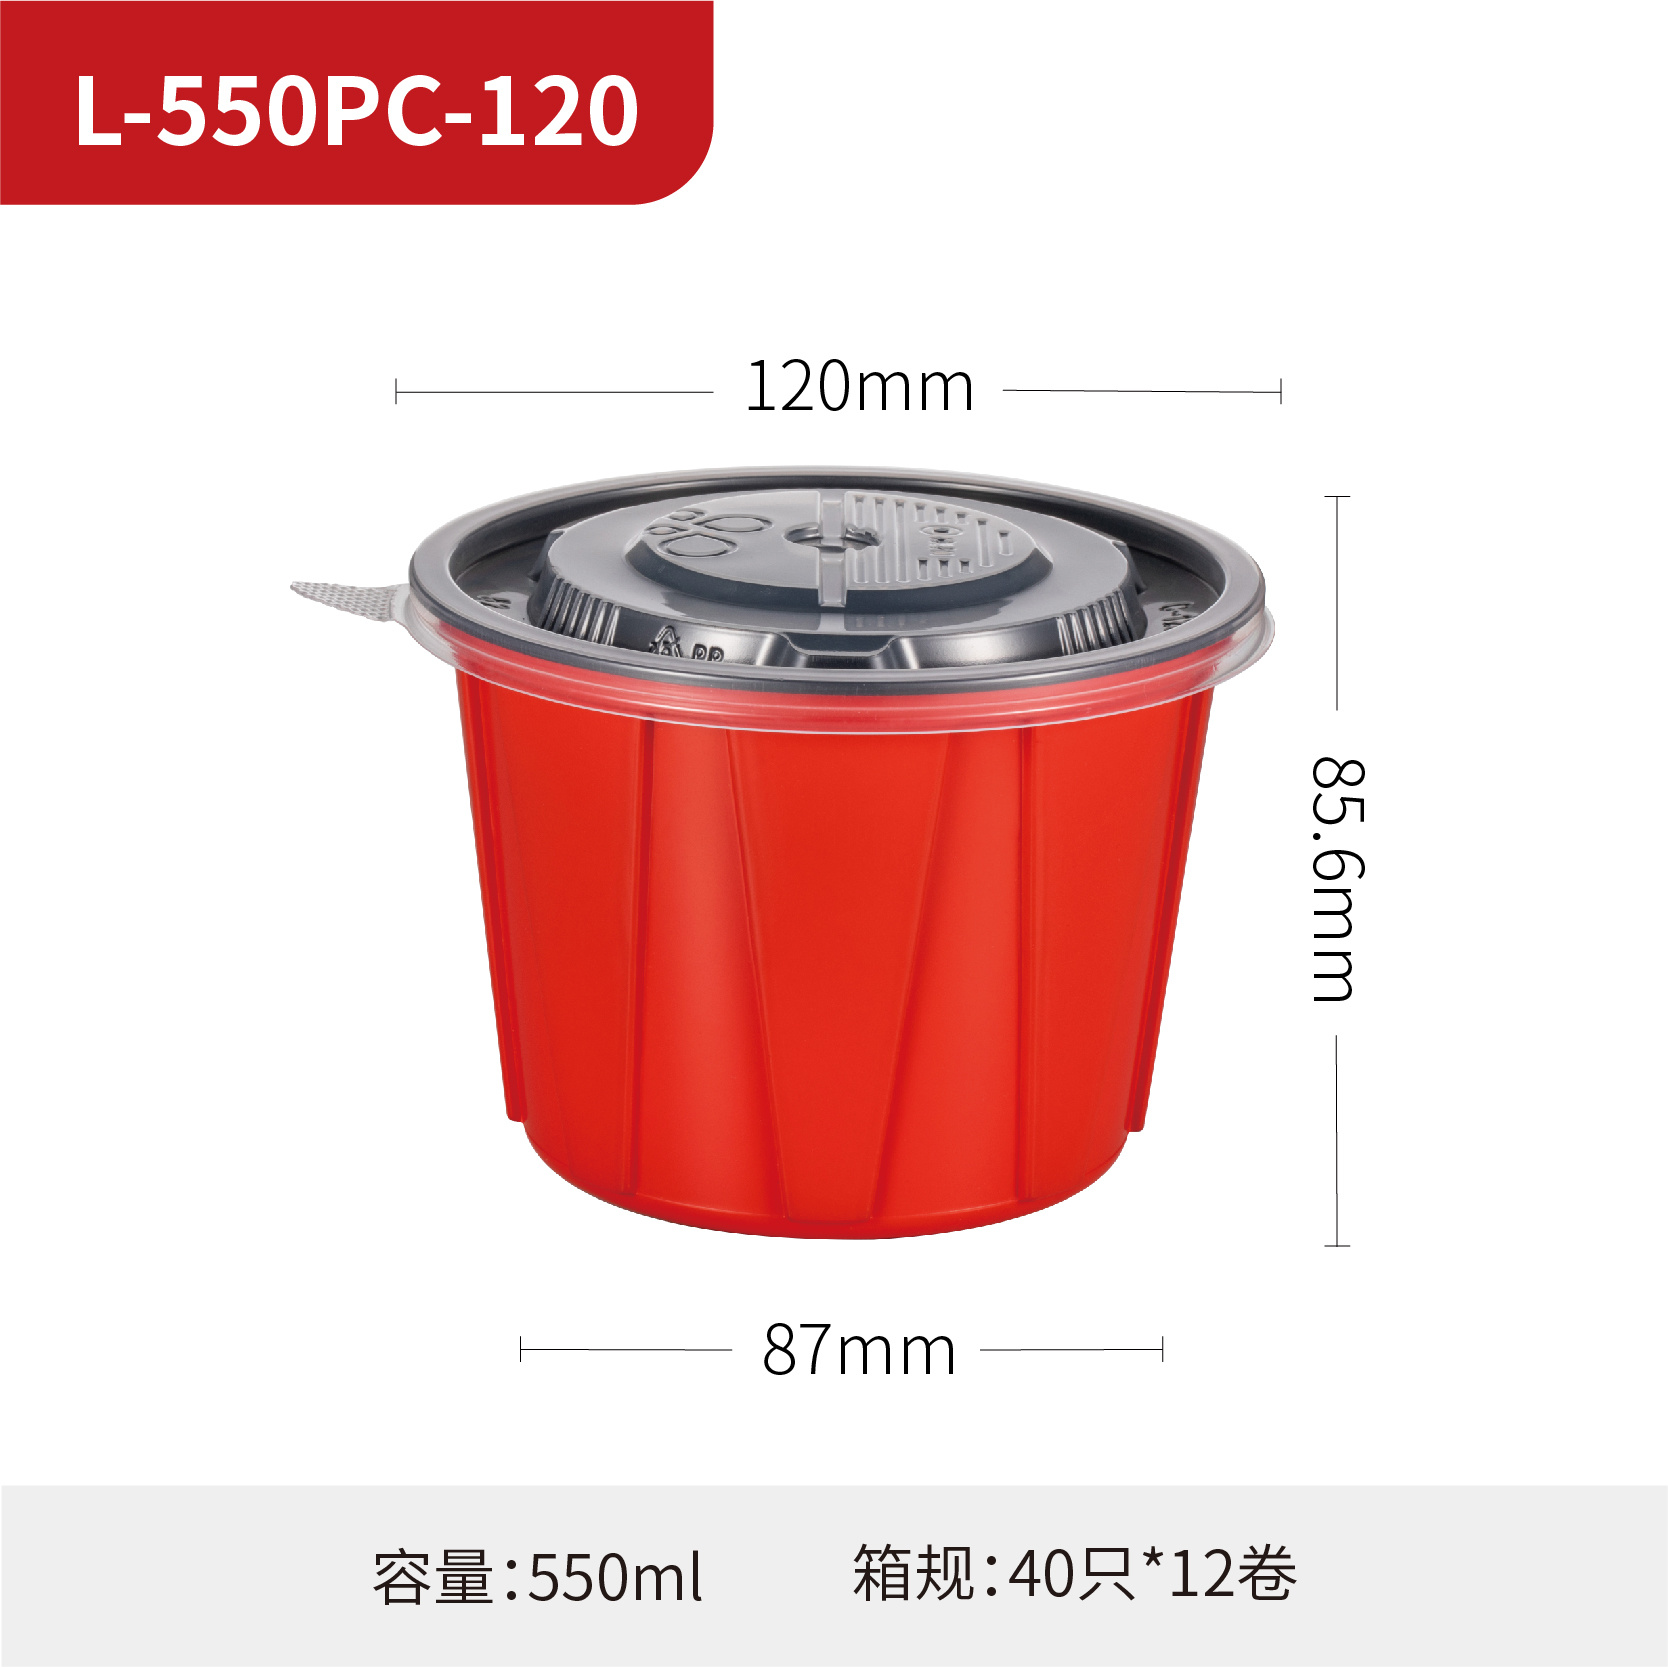 L-550PC-120